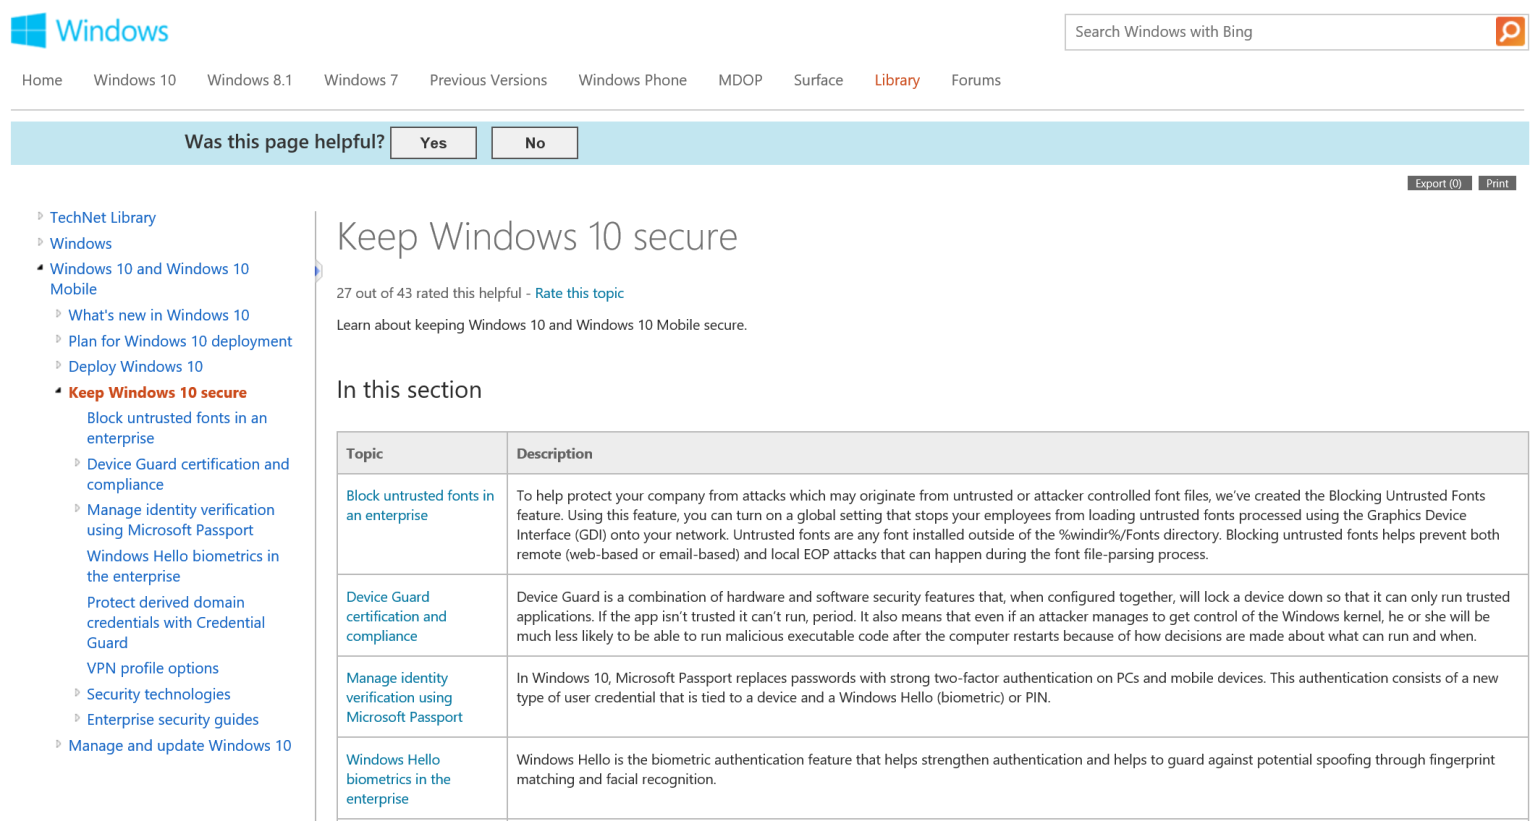 Link Windows 10 Servicing Options Windows 10 Security Guide Enterprise Data